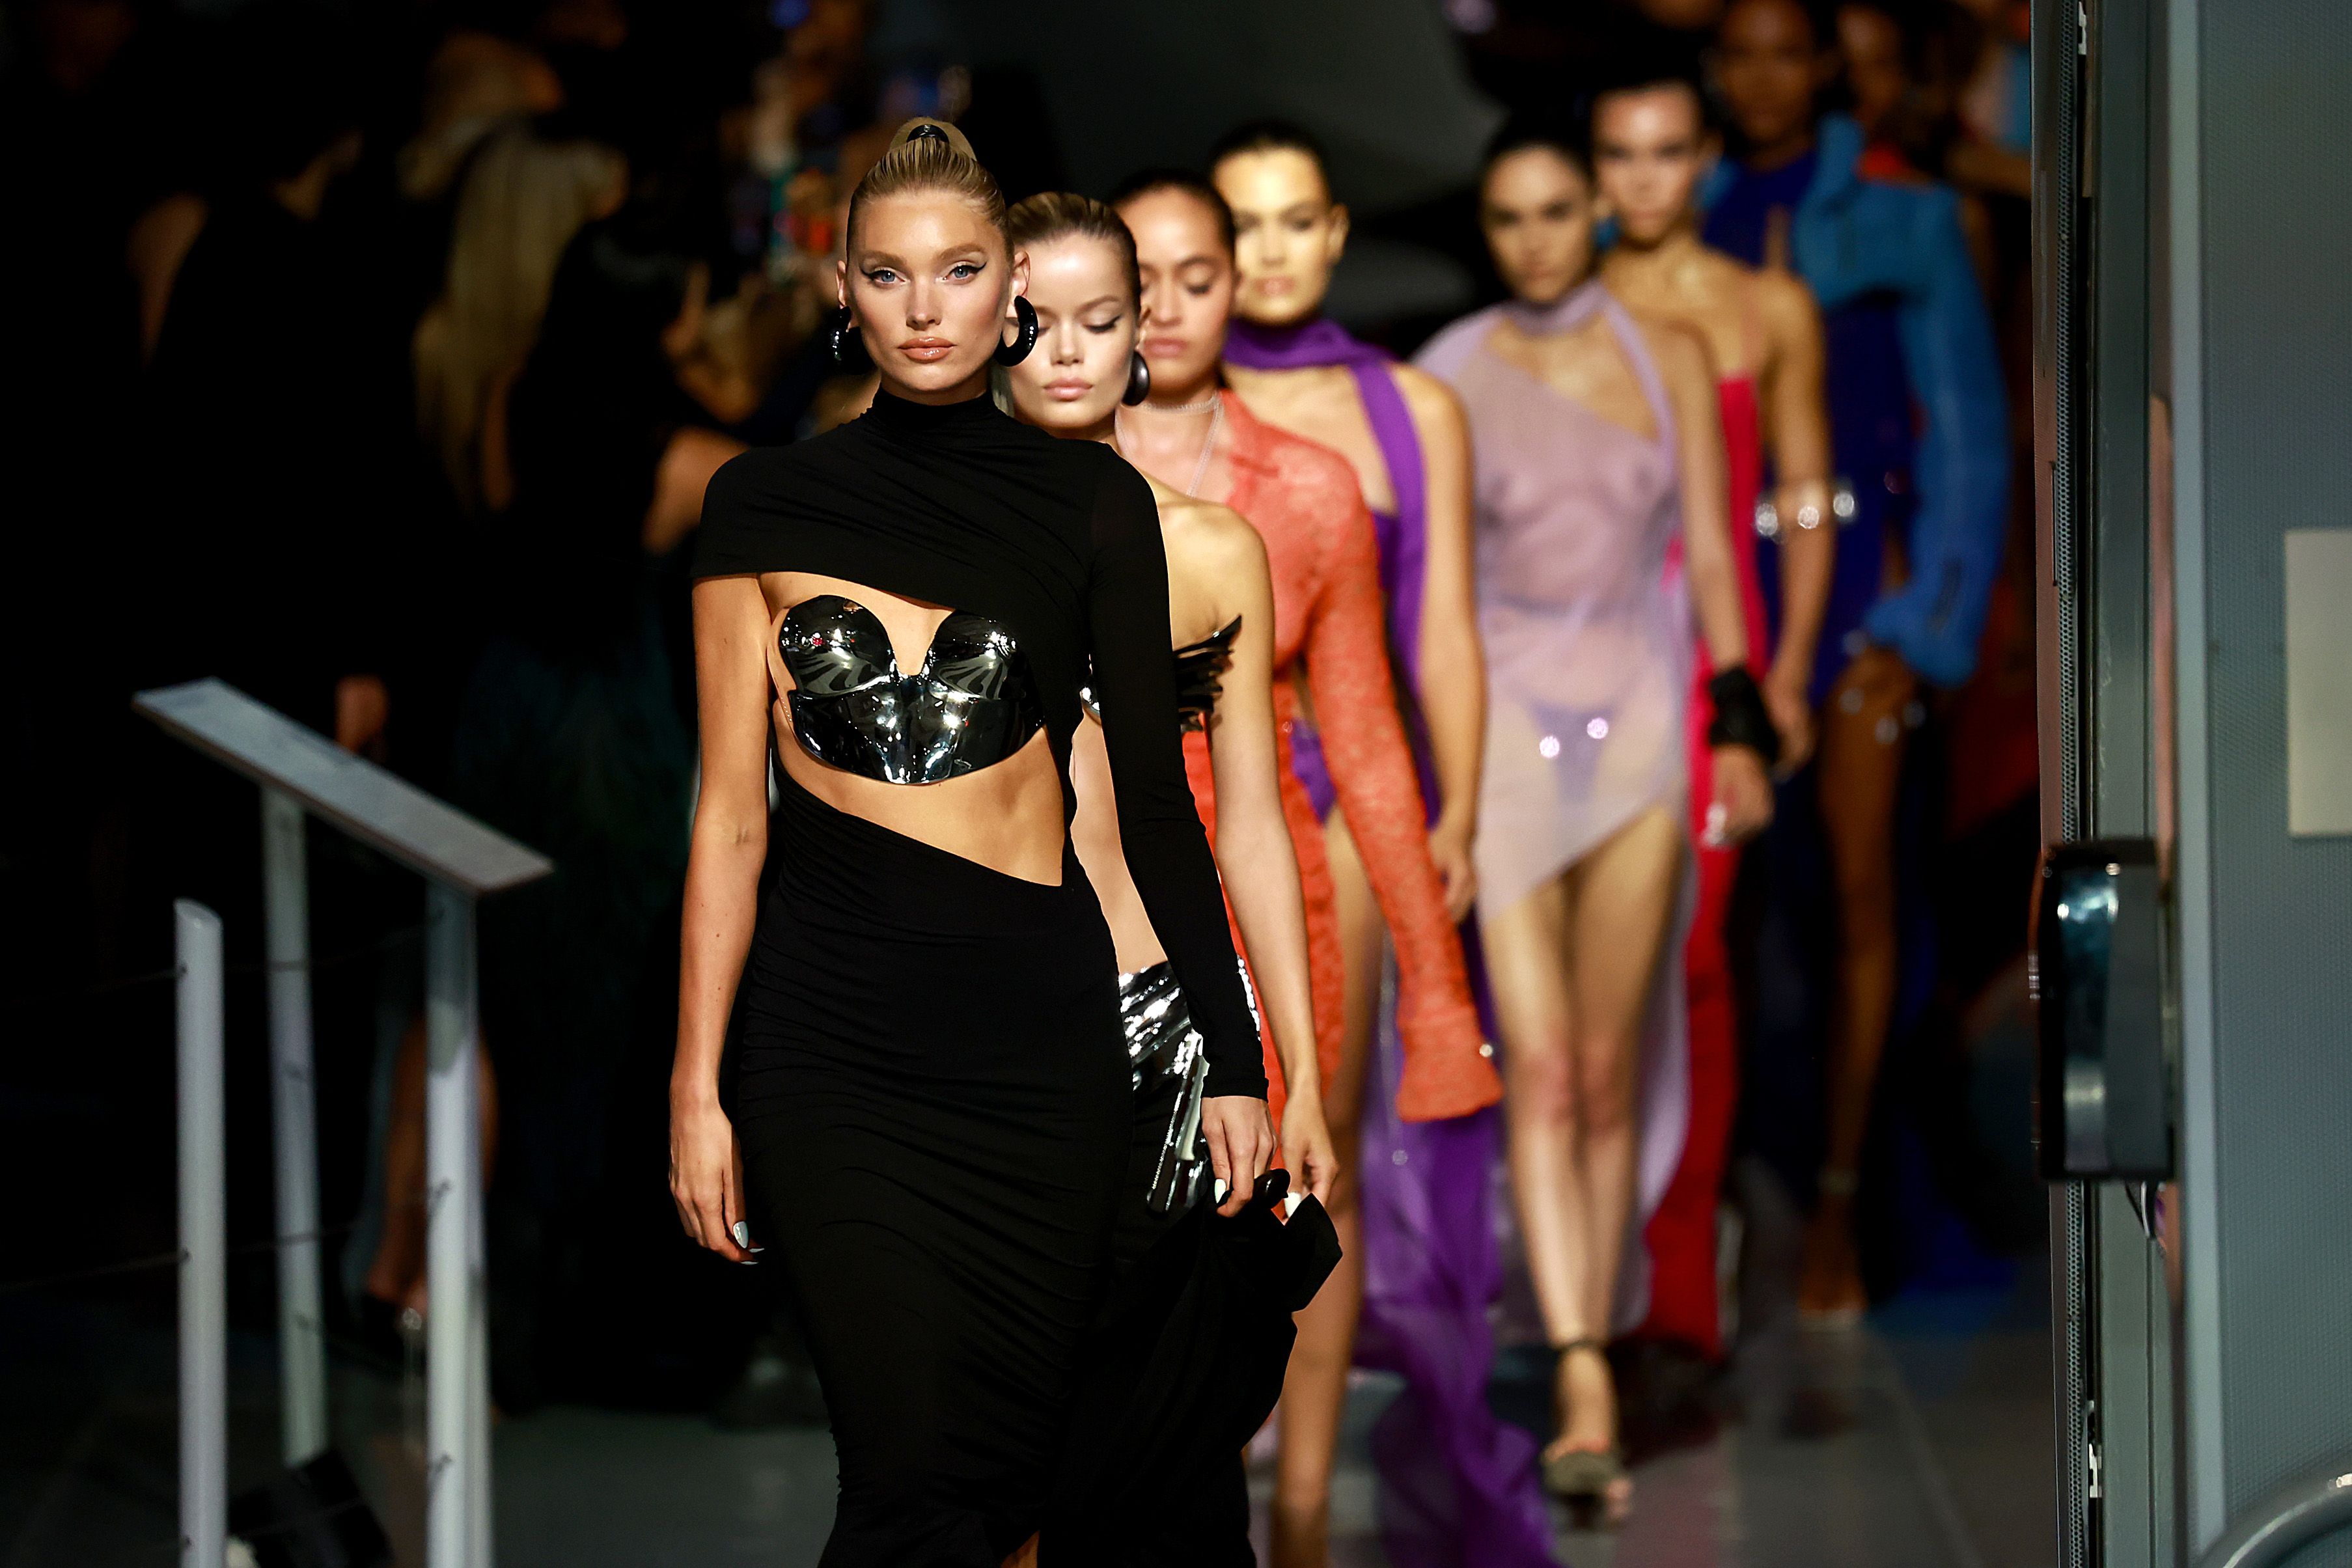 Tom Ford wraps N.Y. Fashion Week with a show of disco glam